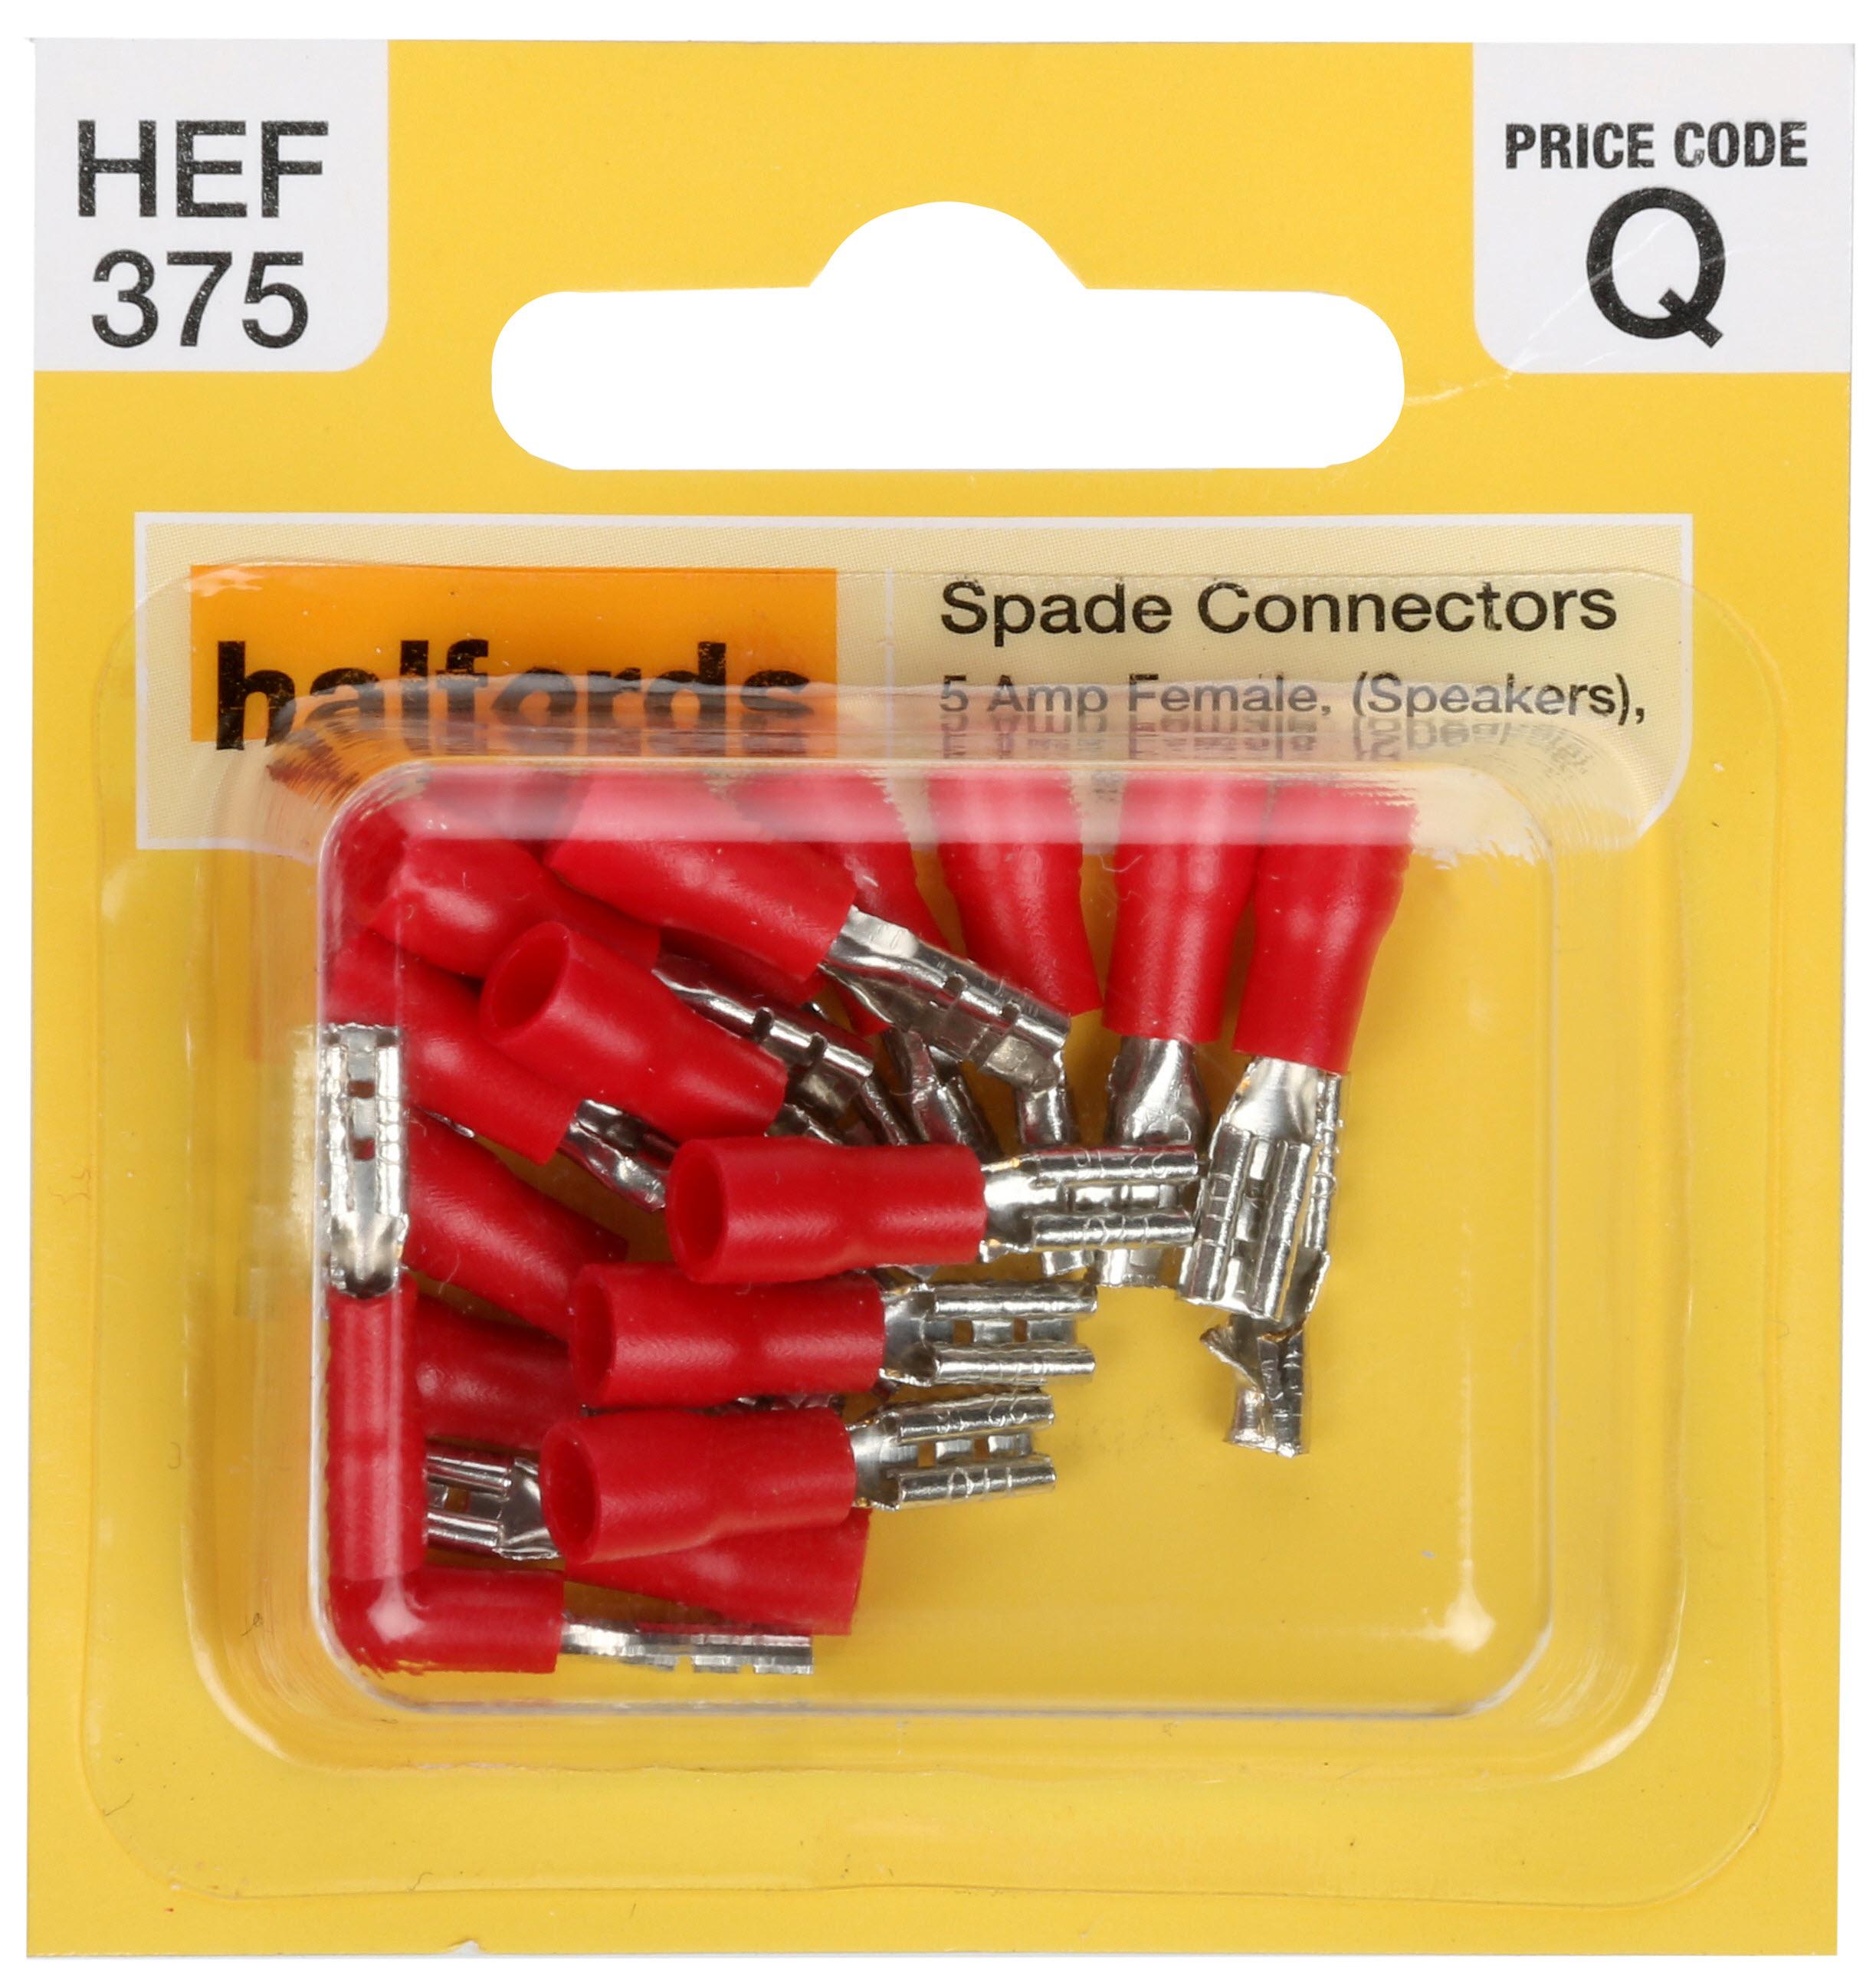 Halfords Spade Connectors Semi Insulated 5 Amp Female Hef375